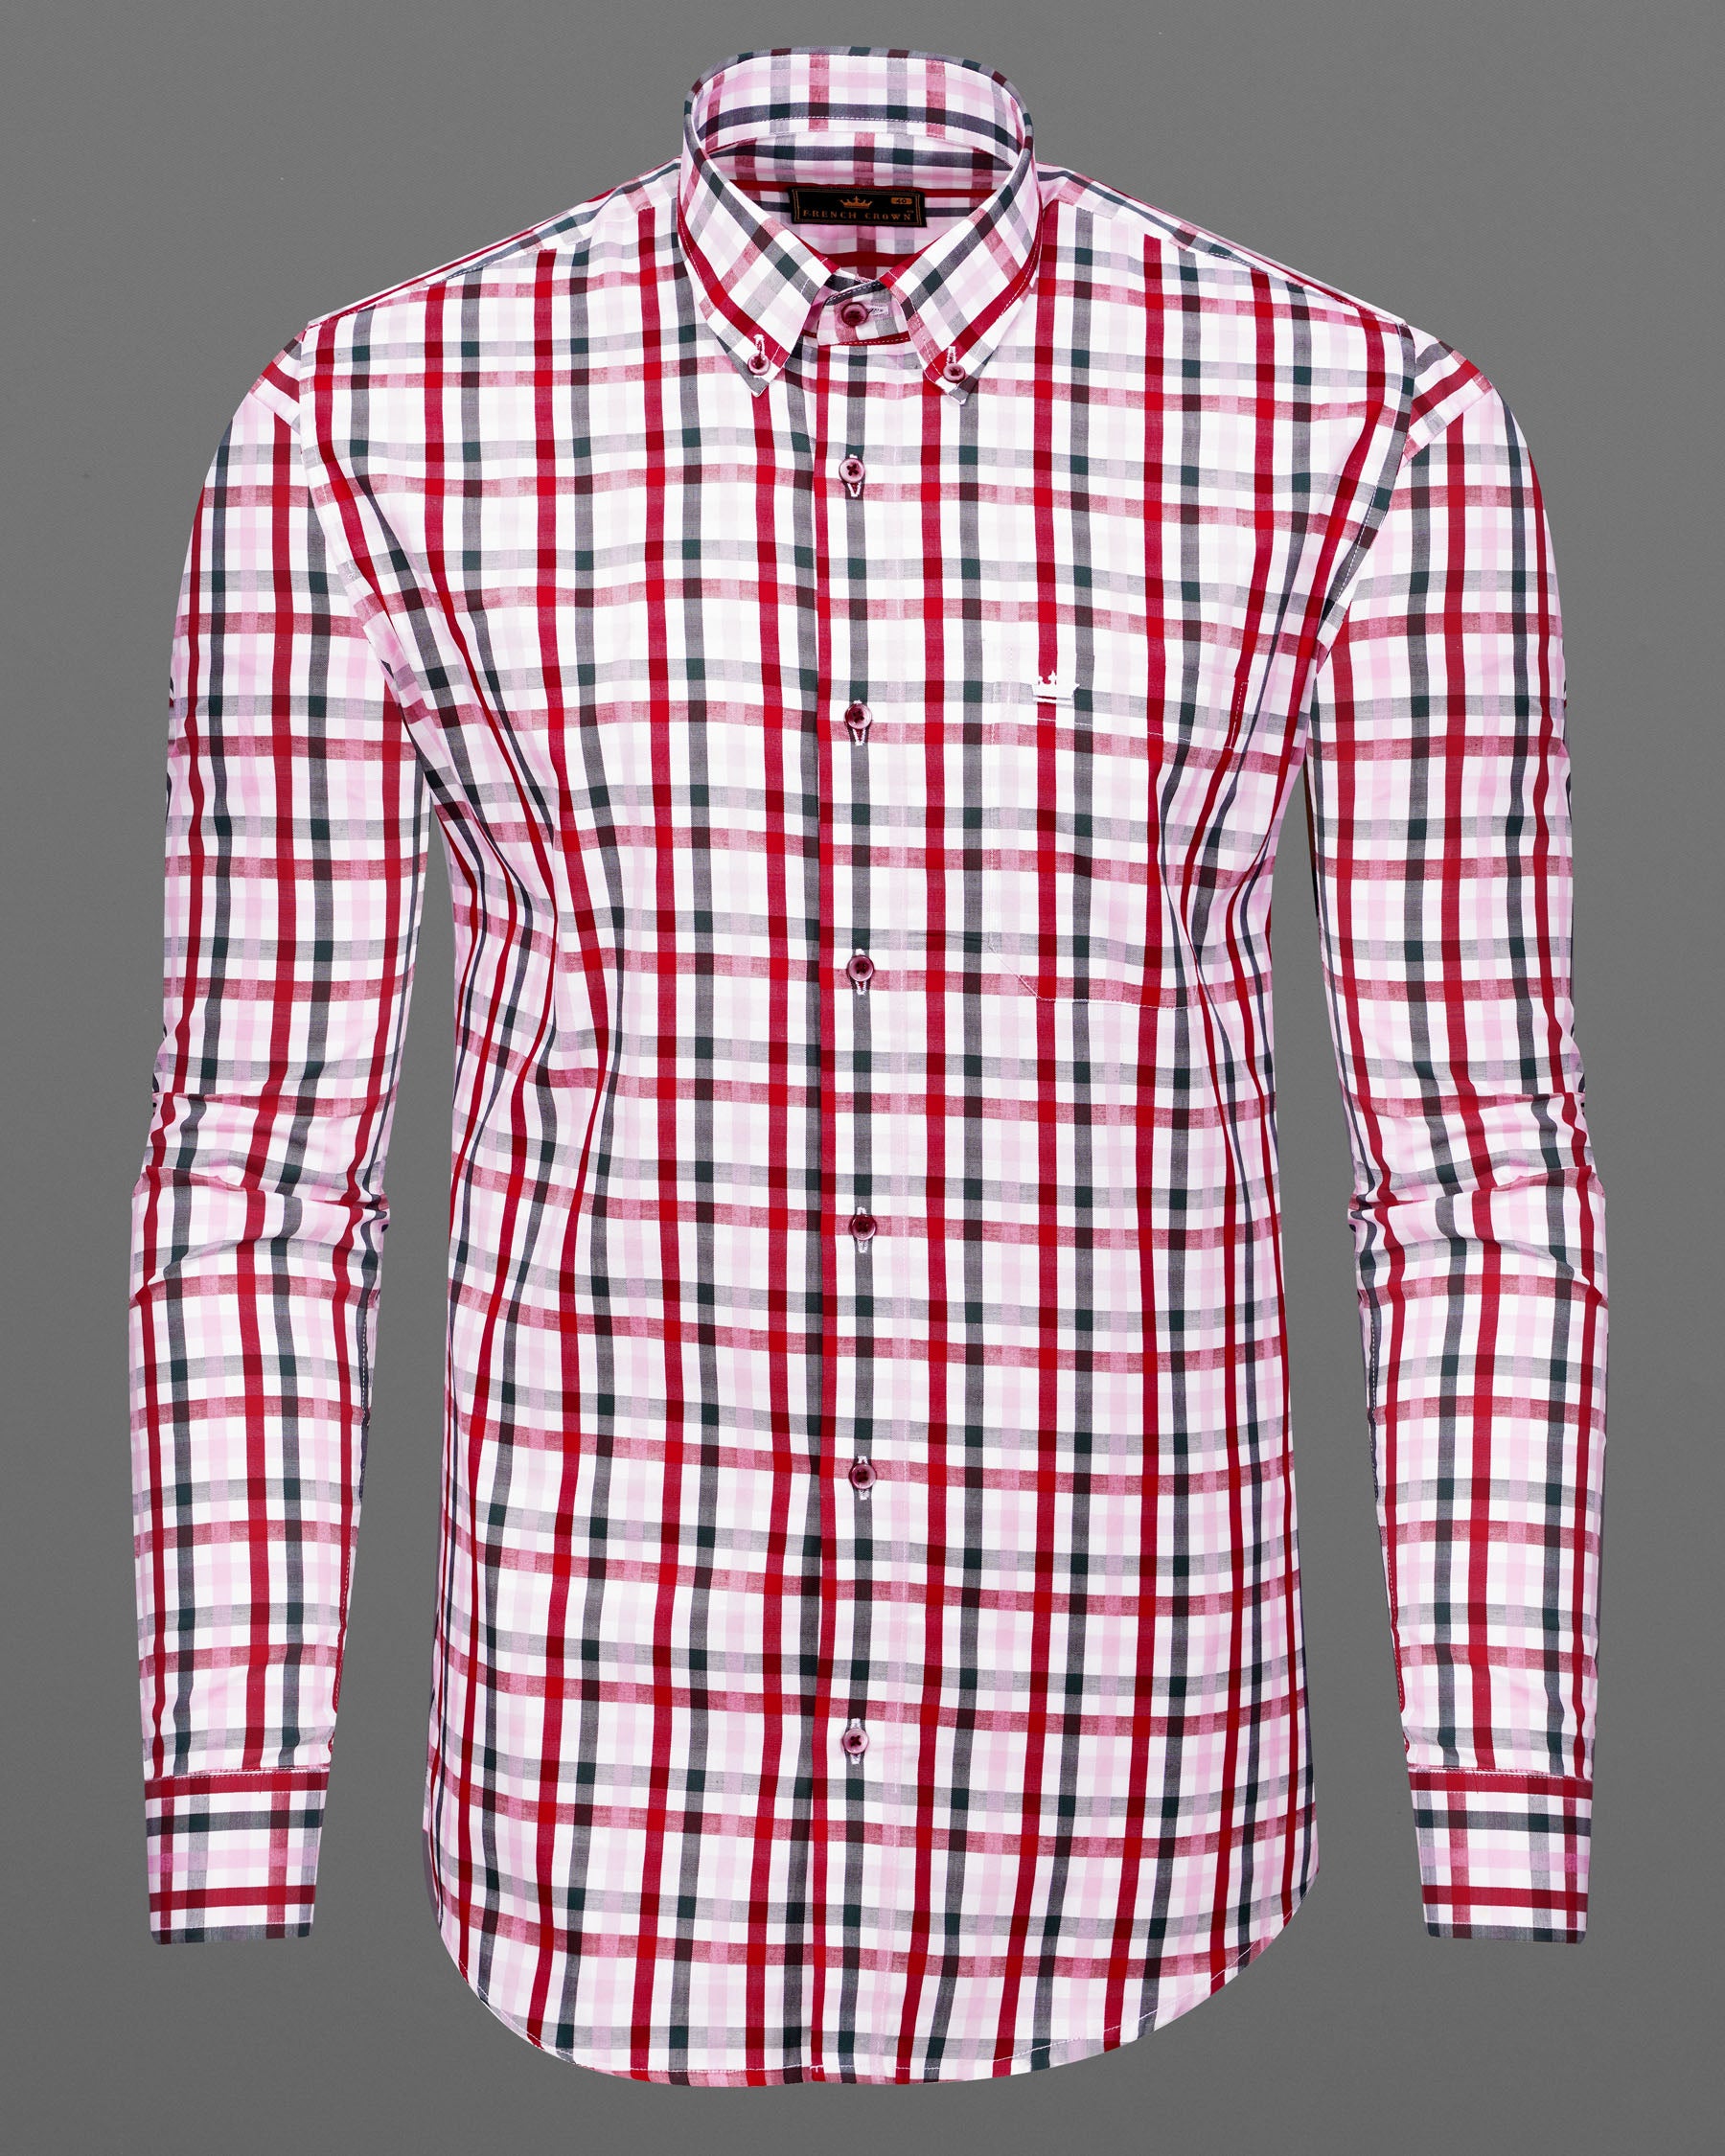 Reddish with White Plaid Twill Premium Cotton Shirt 7181-BD-MN-38,7181-BD-MN-H-38,7181-BD-MN-39,7181-BD-MN-H-39,7181-BD-MN-40,7181-BD-MN-H-40,7181-BD-MN-42,7181-BD-MN-H-42,7181-BD-MN-44,7181-BD-MN-H-44,7181-BD-MN-46,7181-BD-MN-H-46,7181-BD-MN-48,7181-BD-MN-H-48,7181-BD-MN-50,7181-BD-MN-H-50,7181-BD-MN-52,7181-BD-MN-H-52